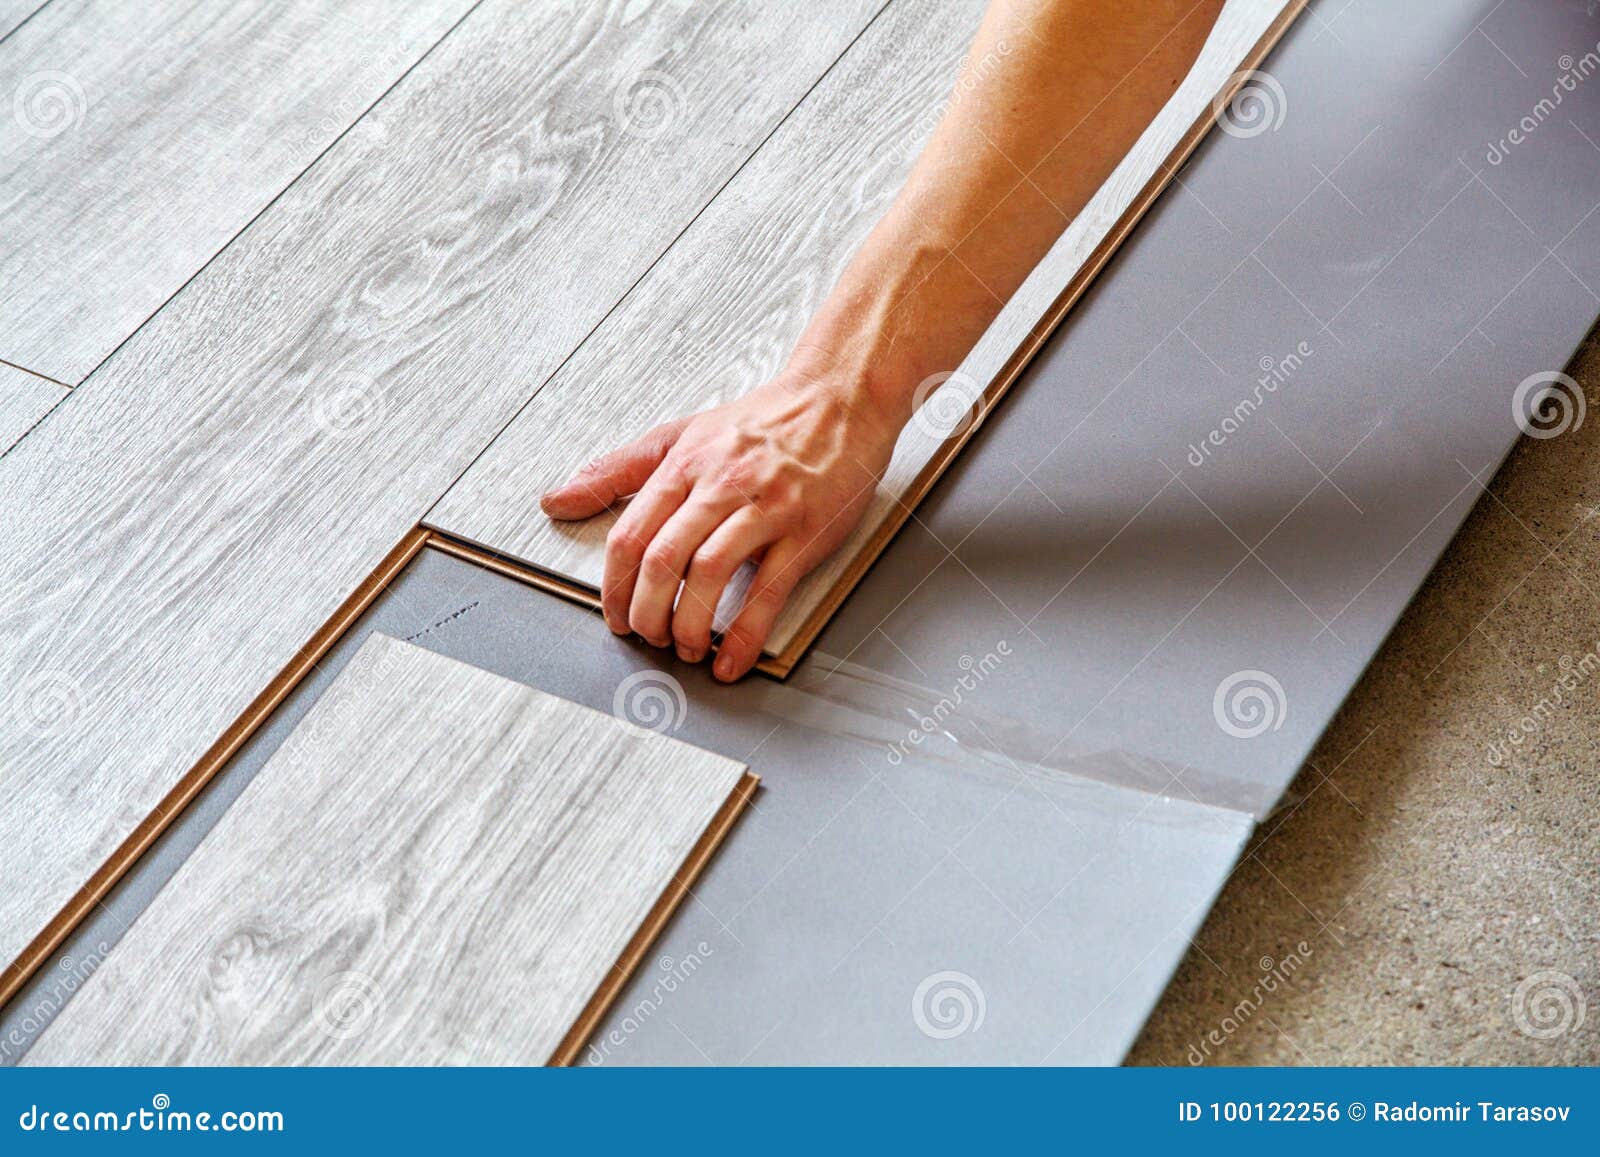 Handyman S Hands Laying Down Laminate Flooring Boards Stock Photo